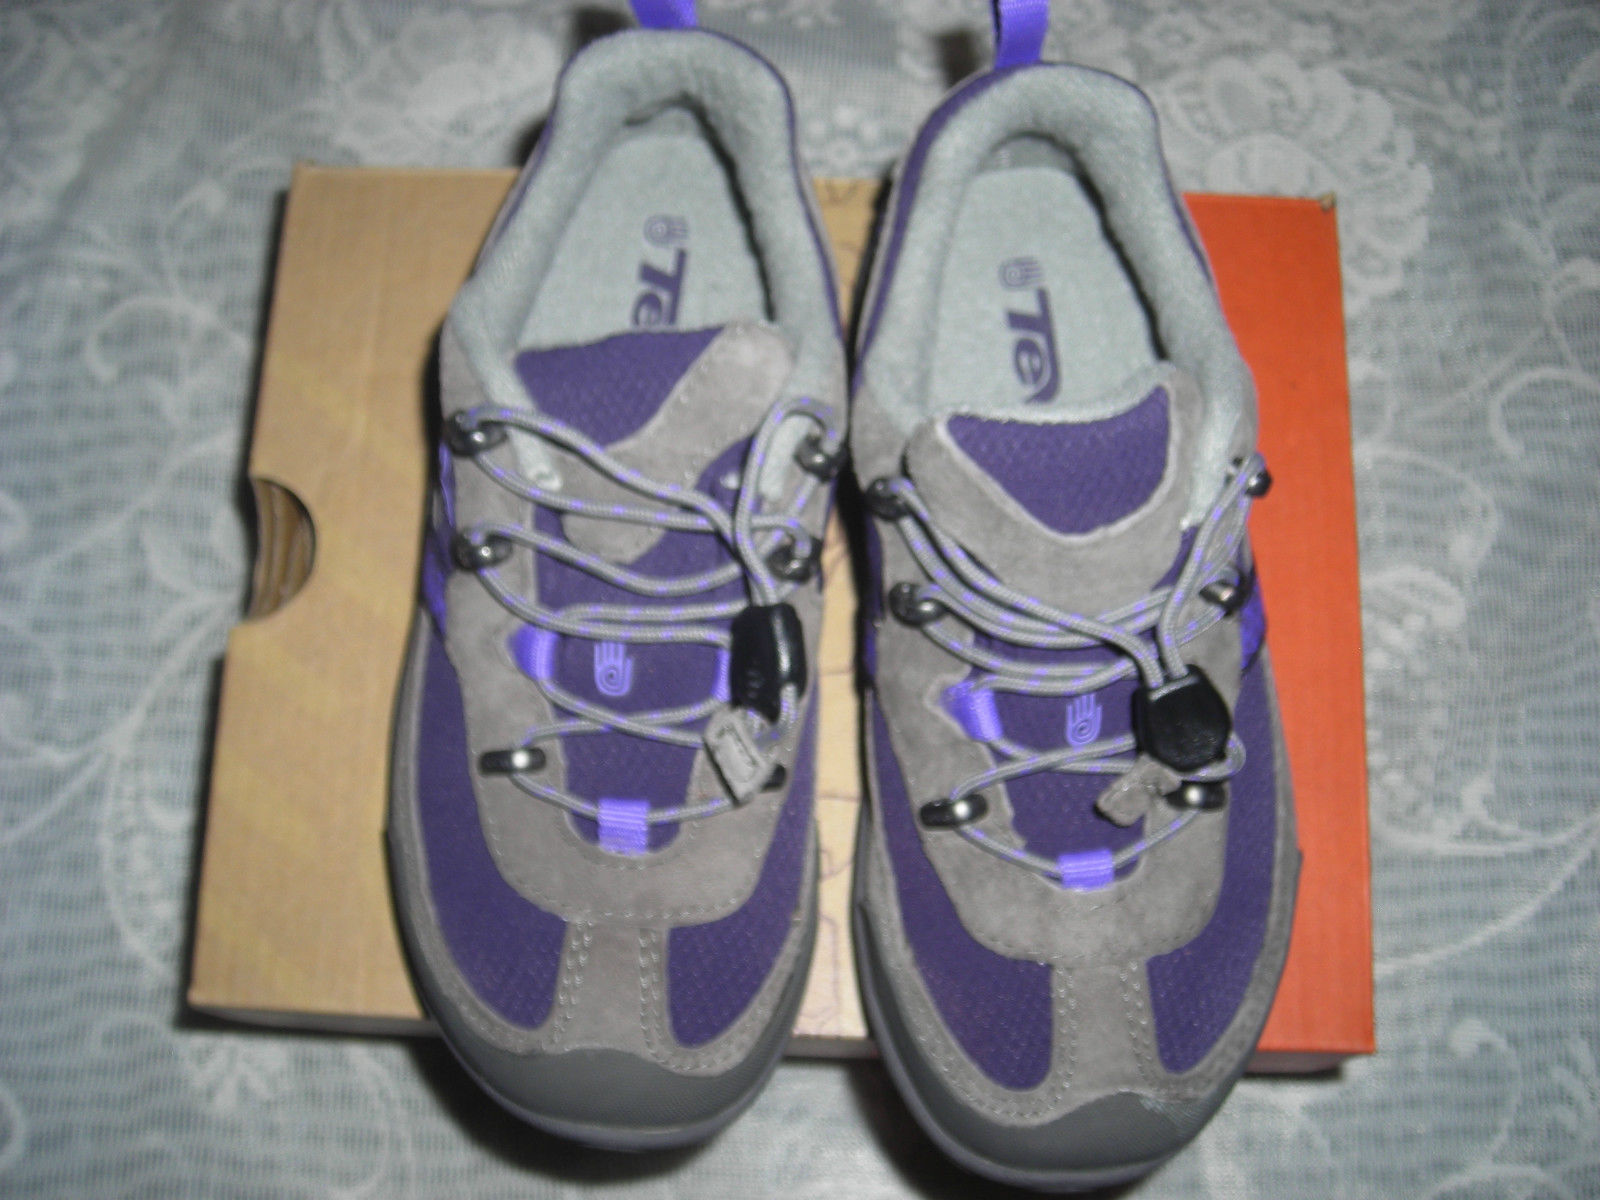 Teva Dalea Mesh K's Myst Girls Athletic Purple Shoes Size US 13 Euro 30 ST#4127 - $50.00